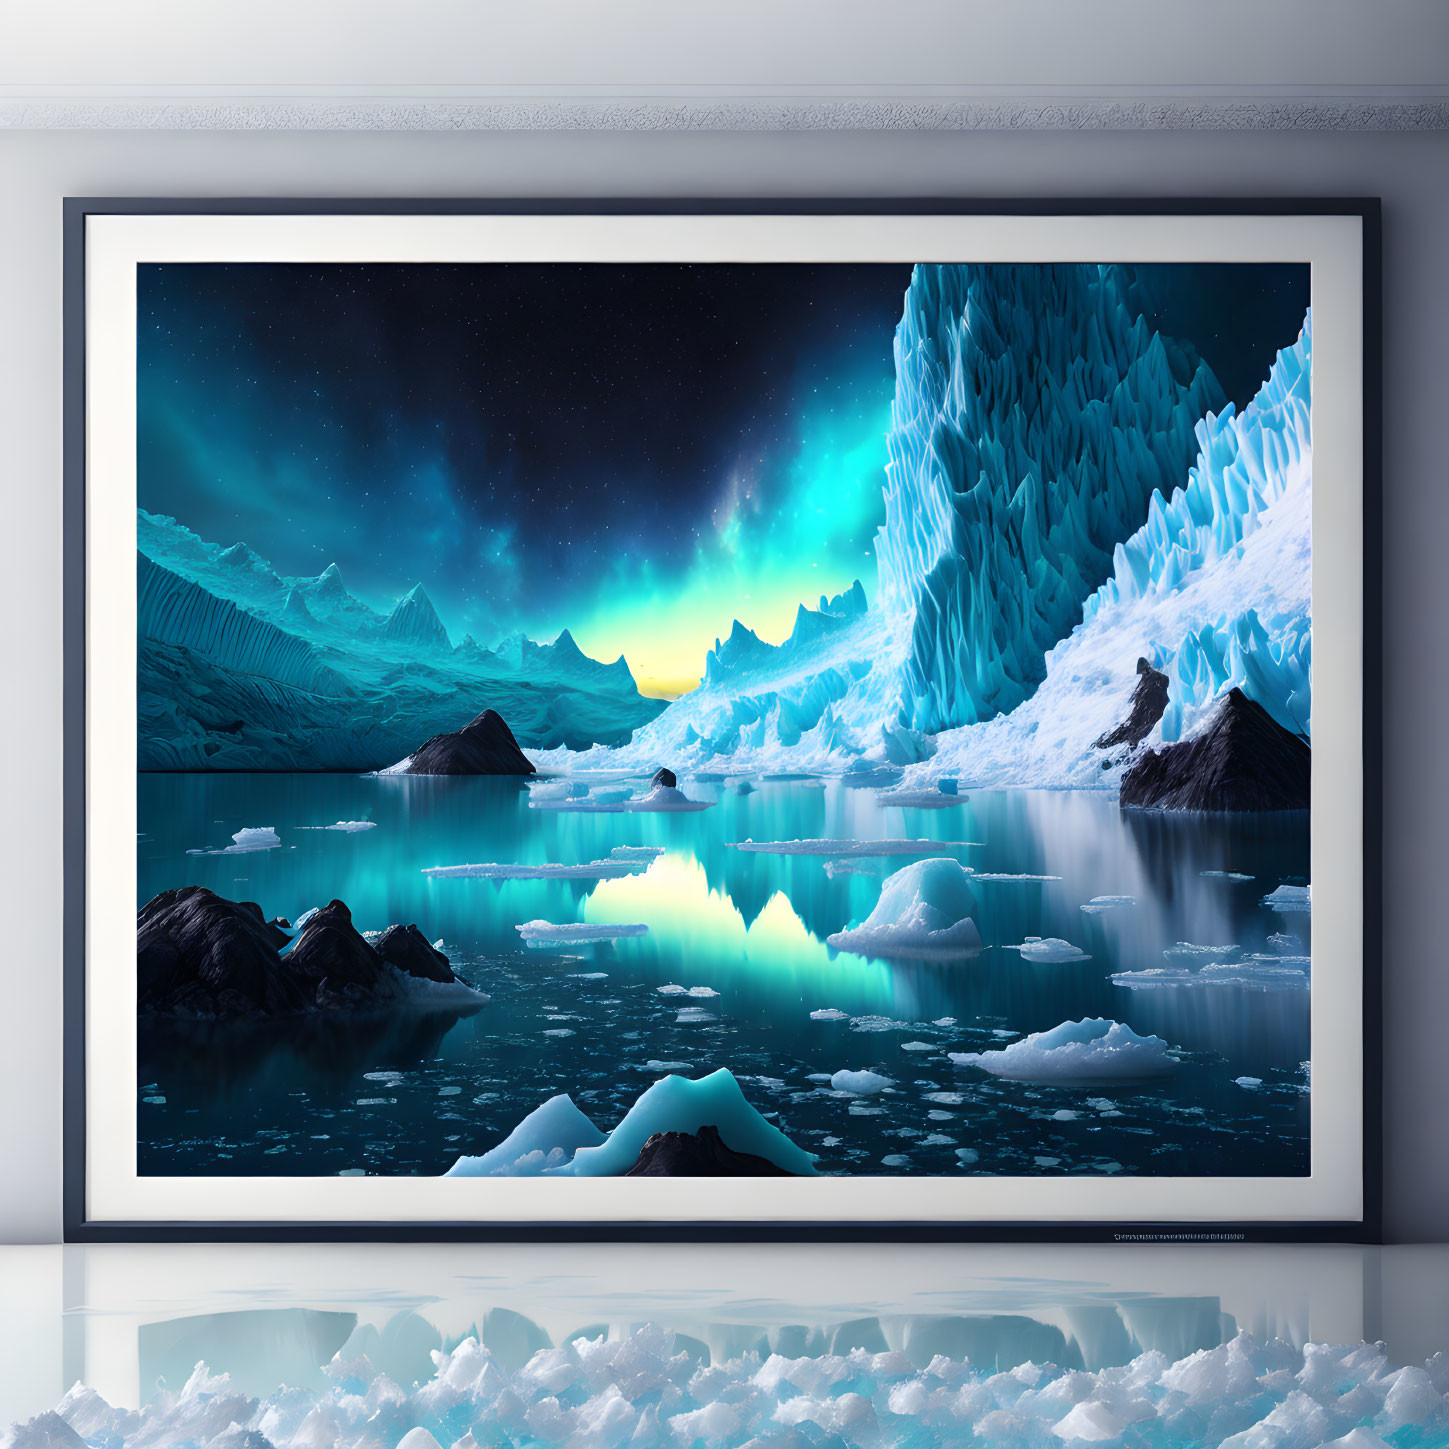 Polar landscape with aurora borealis displayed in room